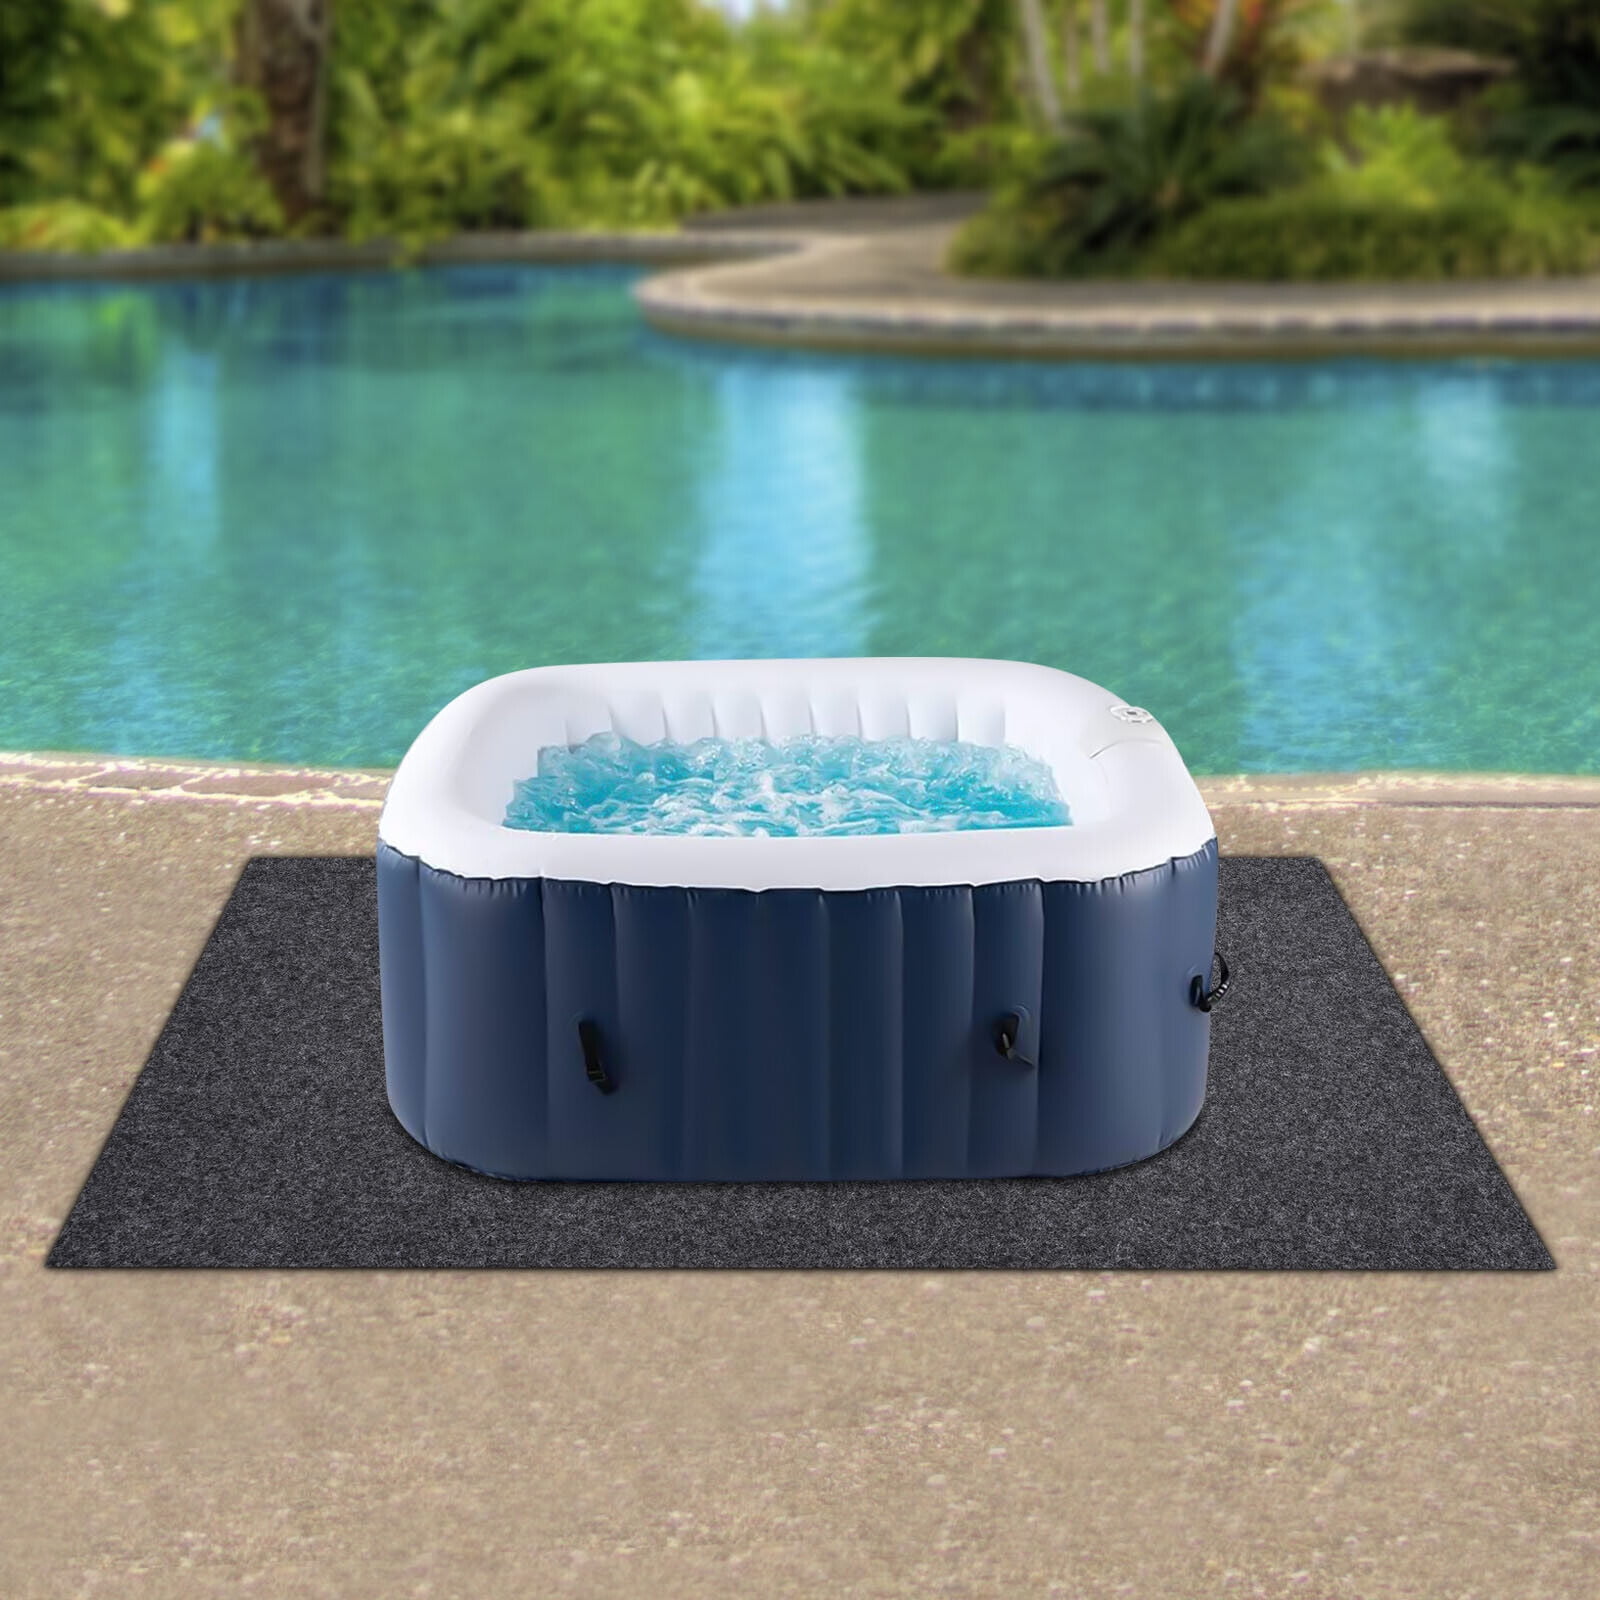 HOMSHIAM 79 Inch Dia Hot Tub Mat, Above-Ground Pool Protector Mat